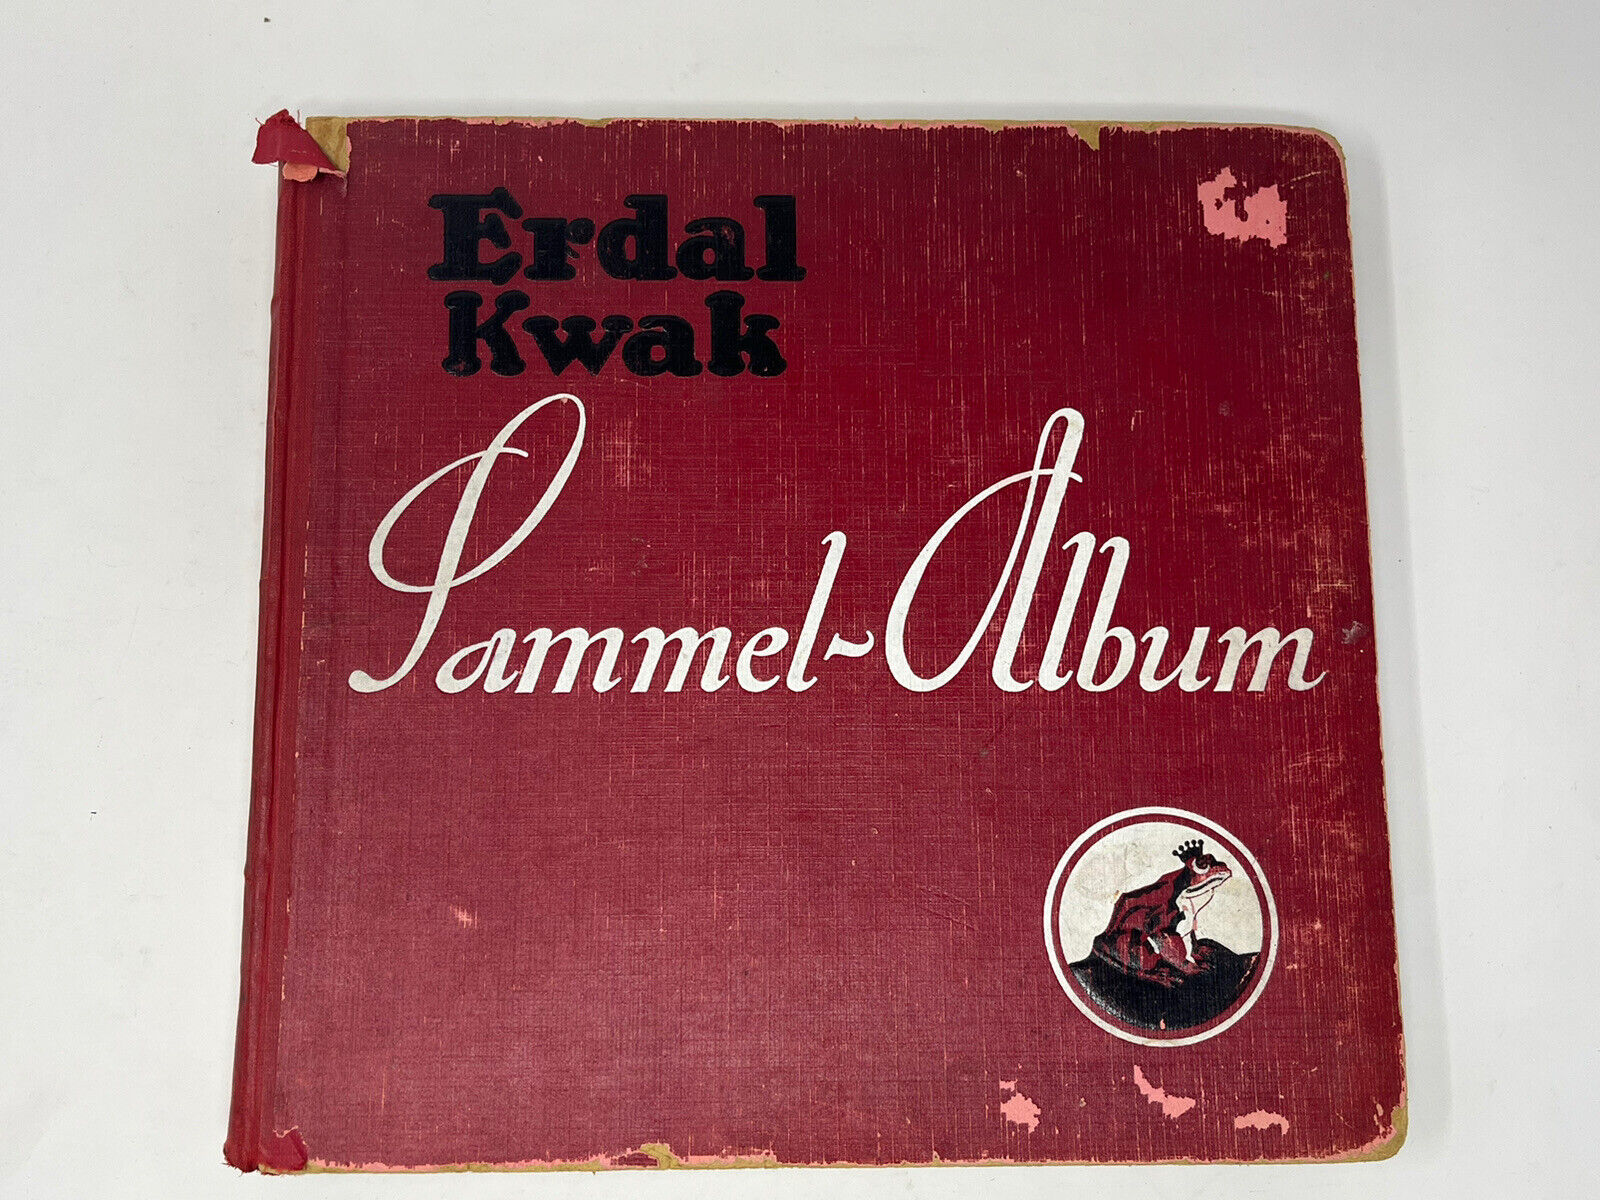 Rare German Trade Cards in an Album-Erdal-Kwak Sammel Album 36 sets of six cards